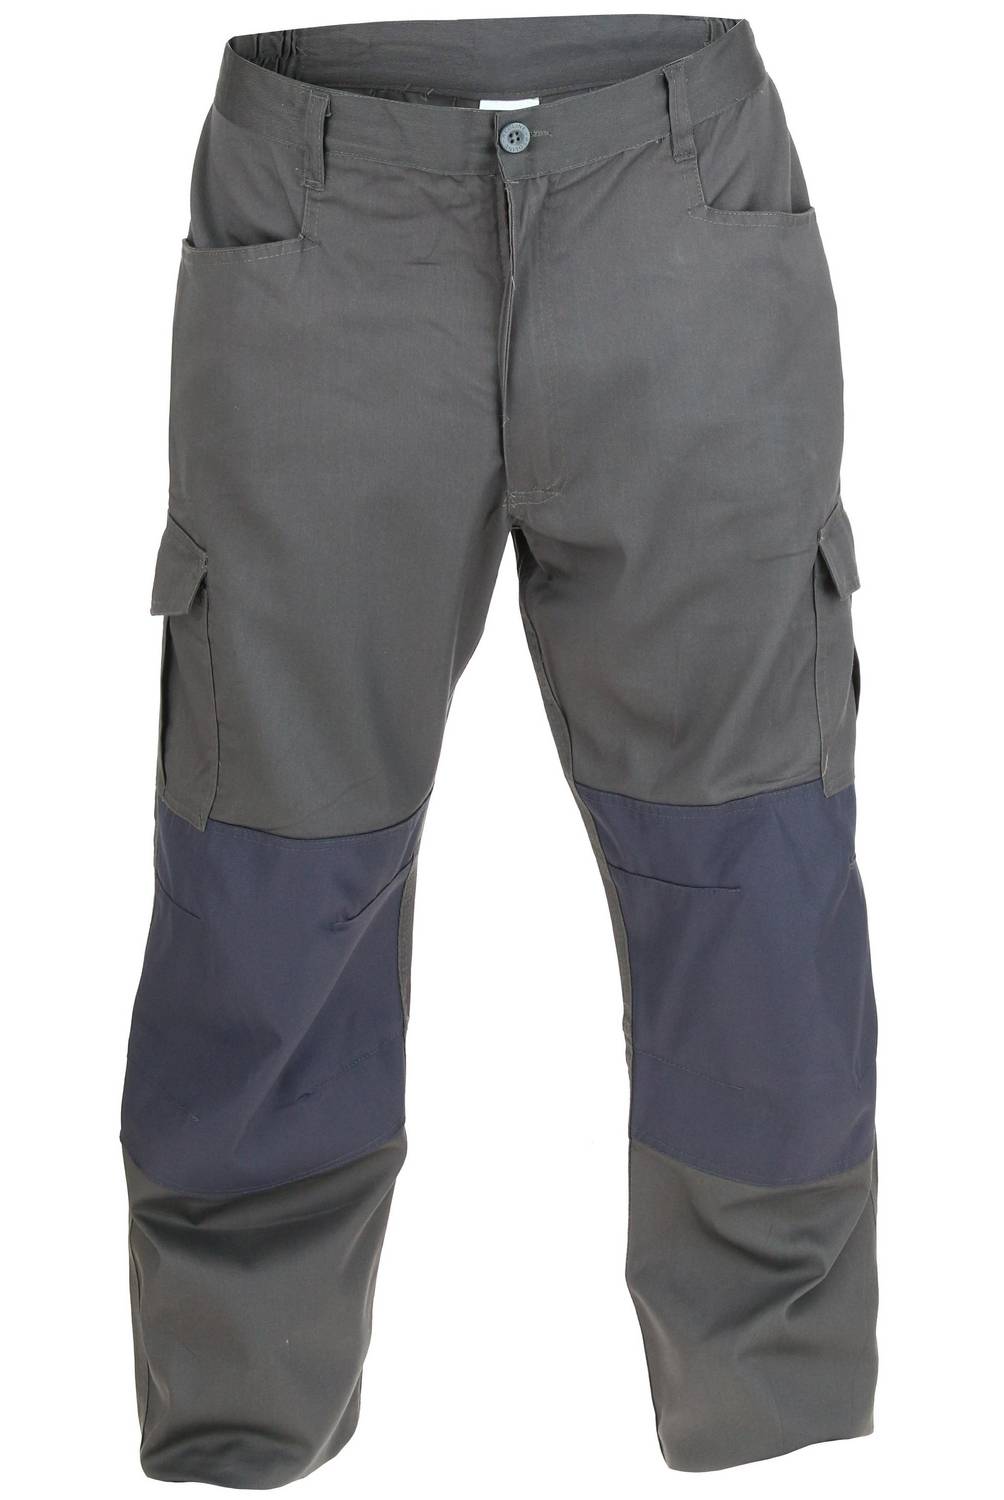 REDLINE - Pantalón cargo gris L